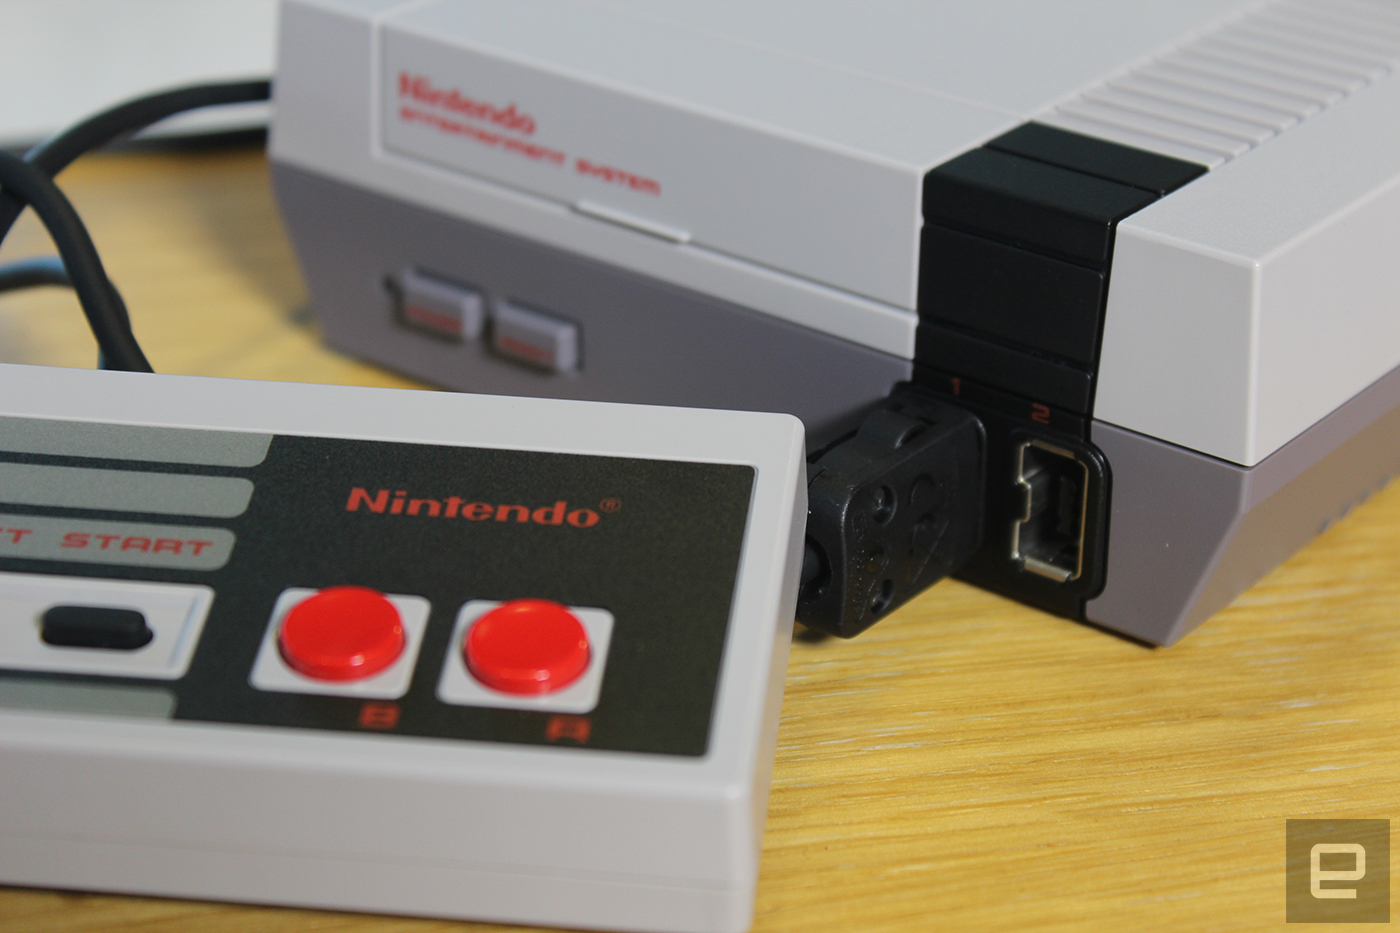 Nintendo Super NES Classic Edition Home Video Game Consoles for